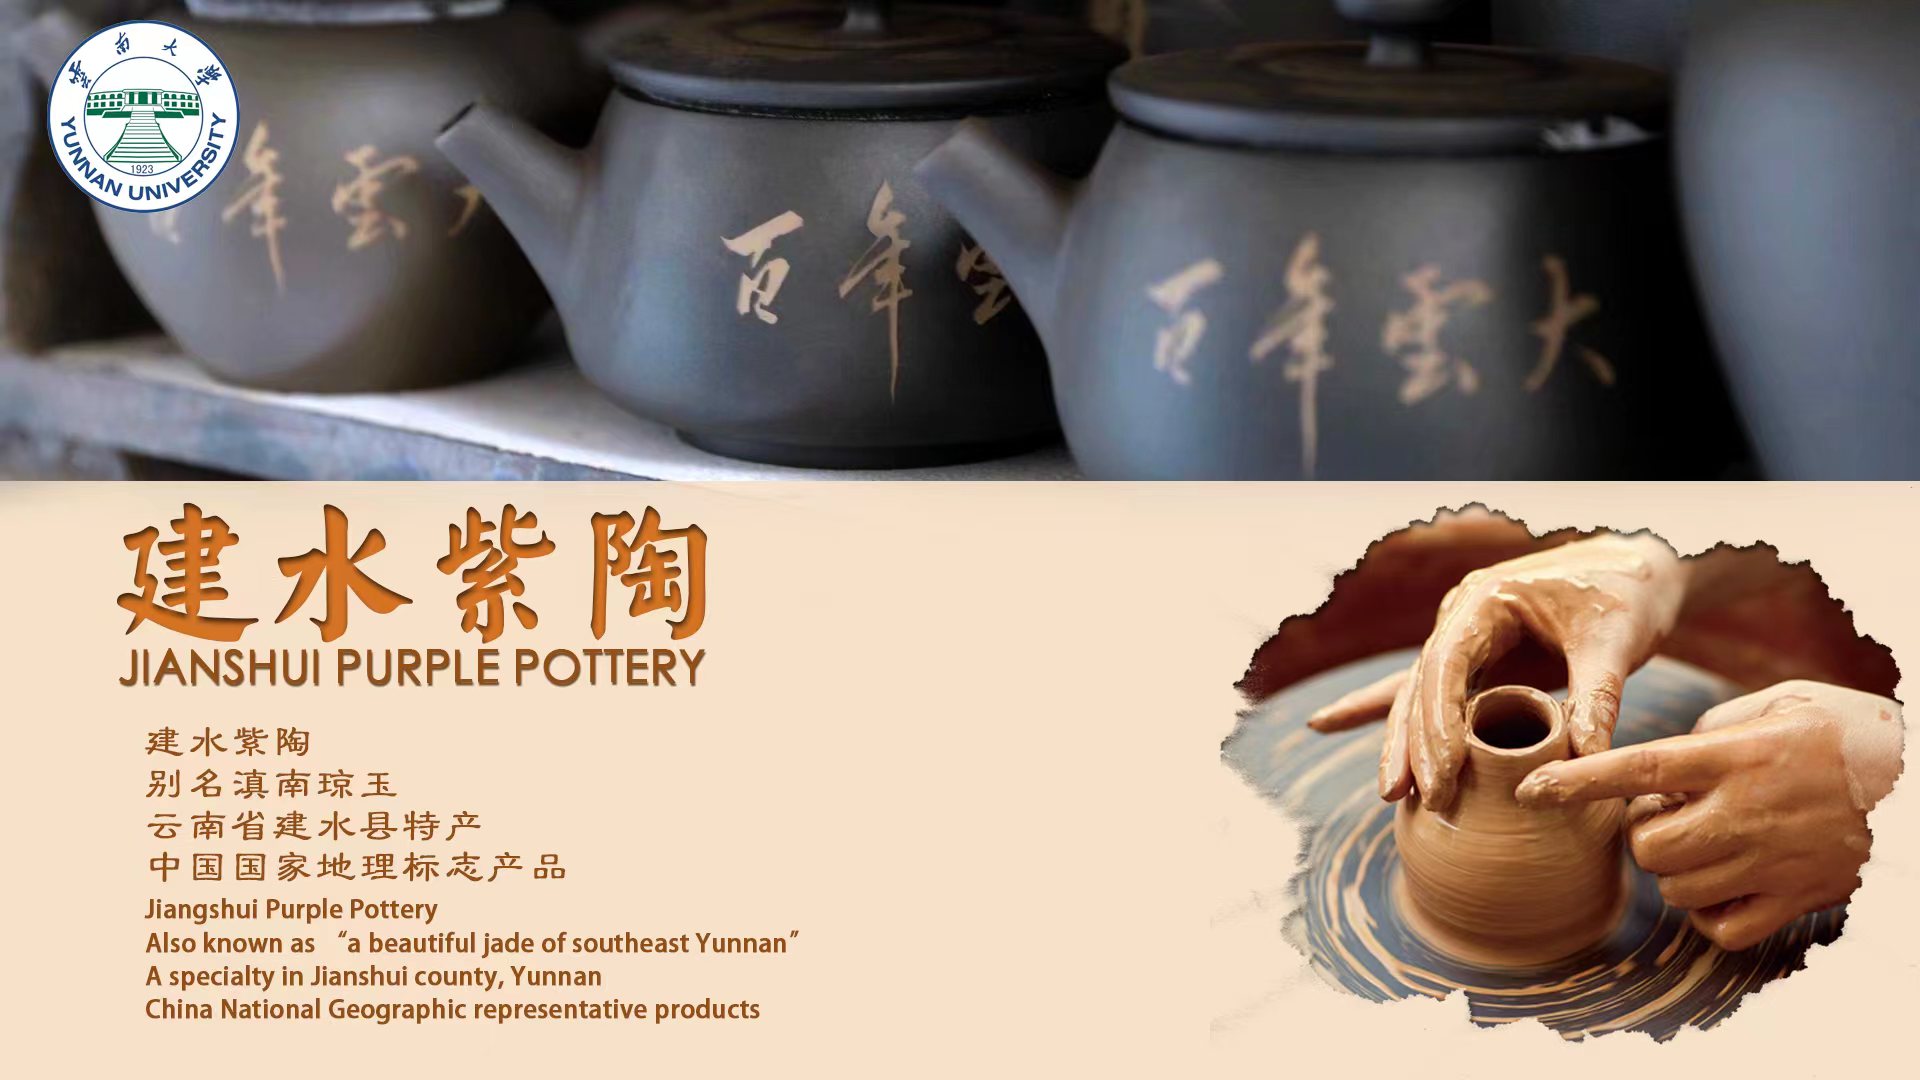 Jianshui Purple Pottery